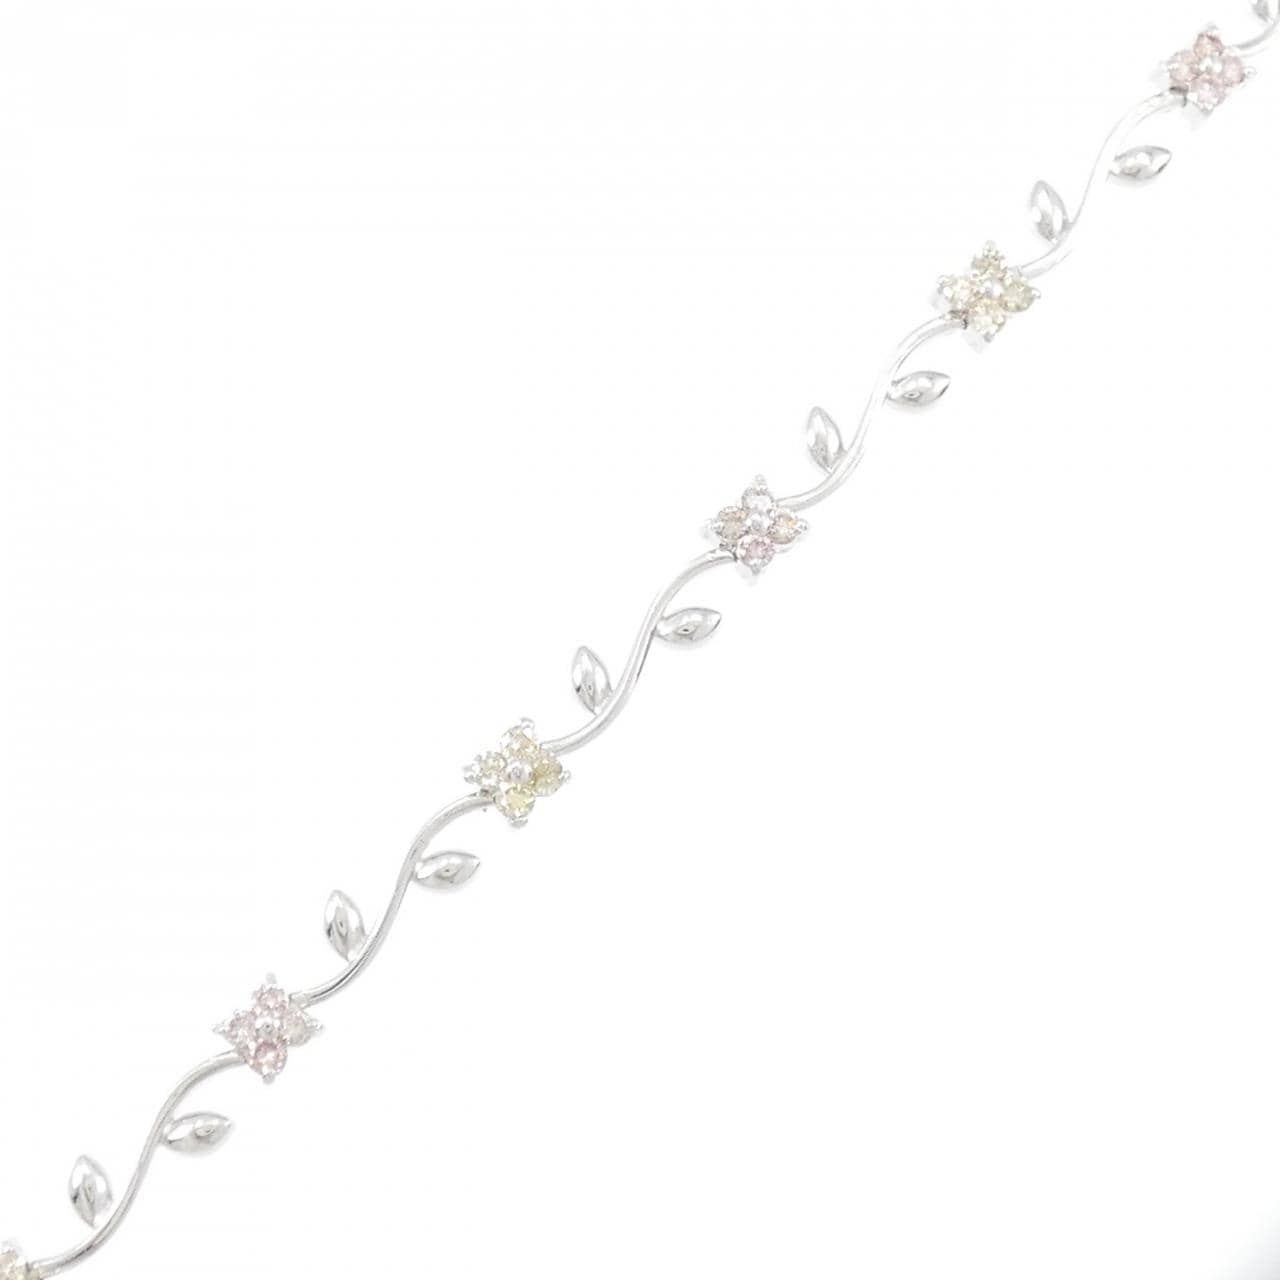 K18WG flower Diamond bracelet 1.00CT